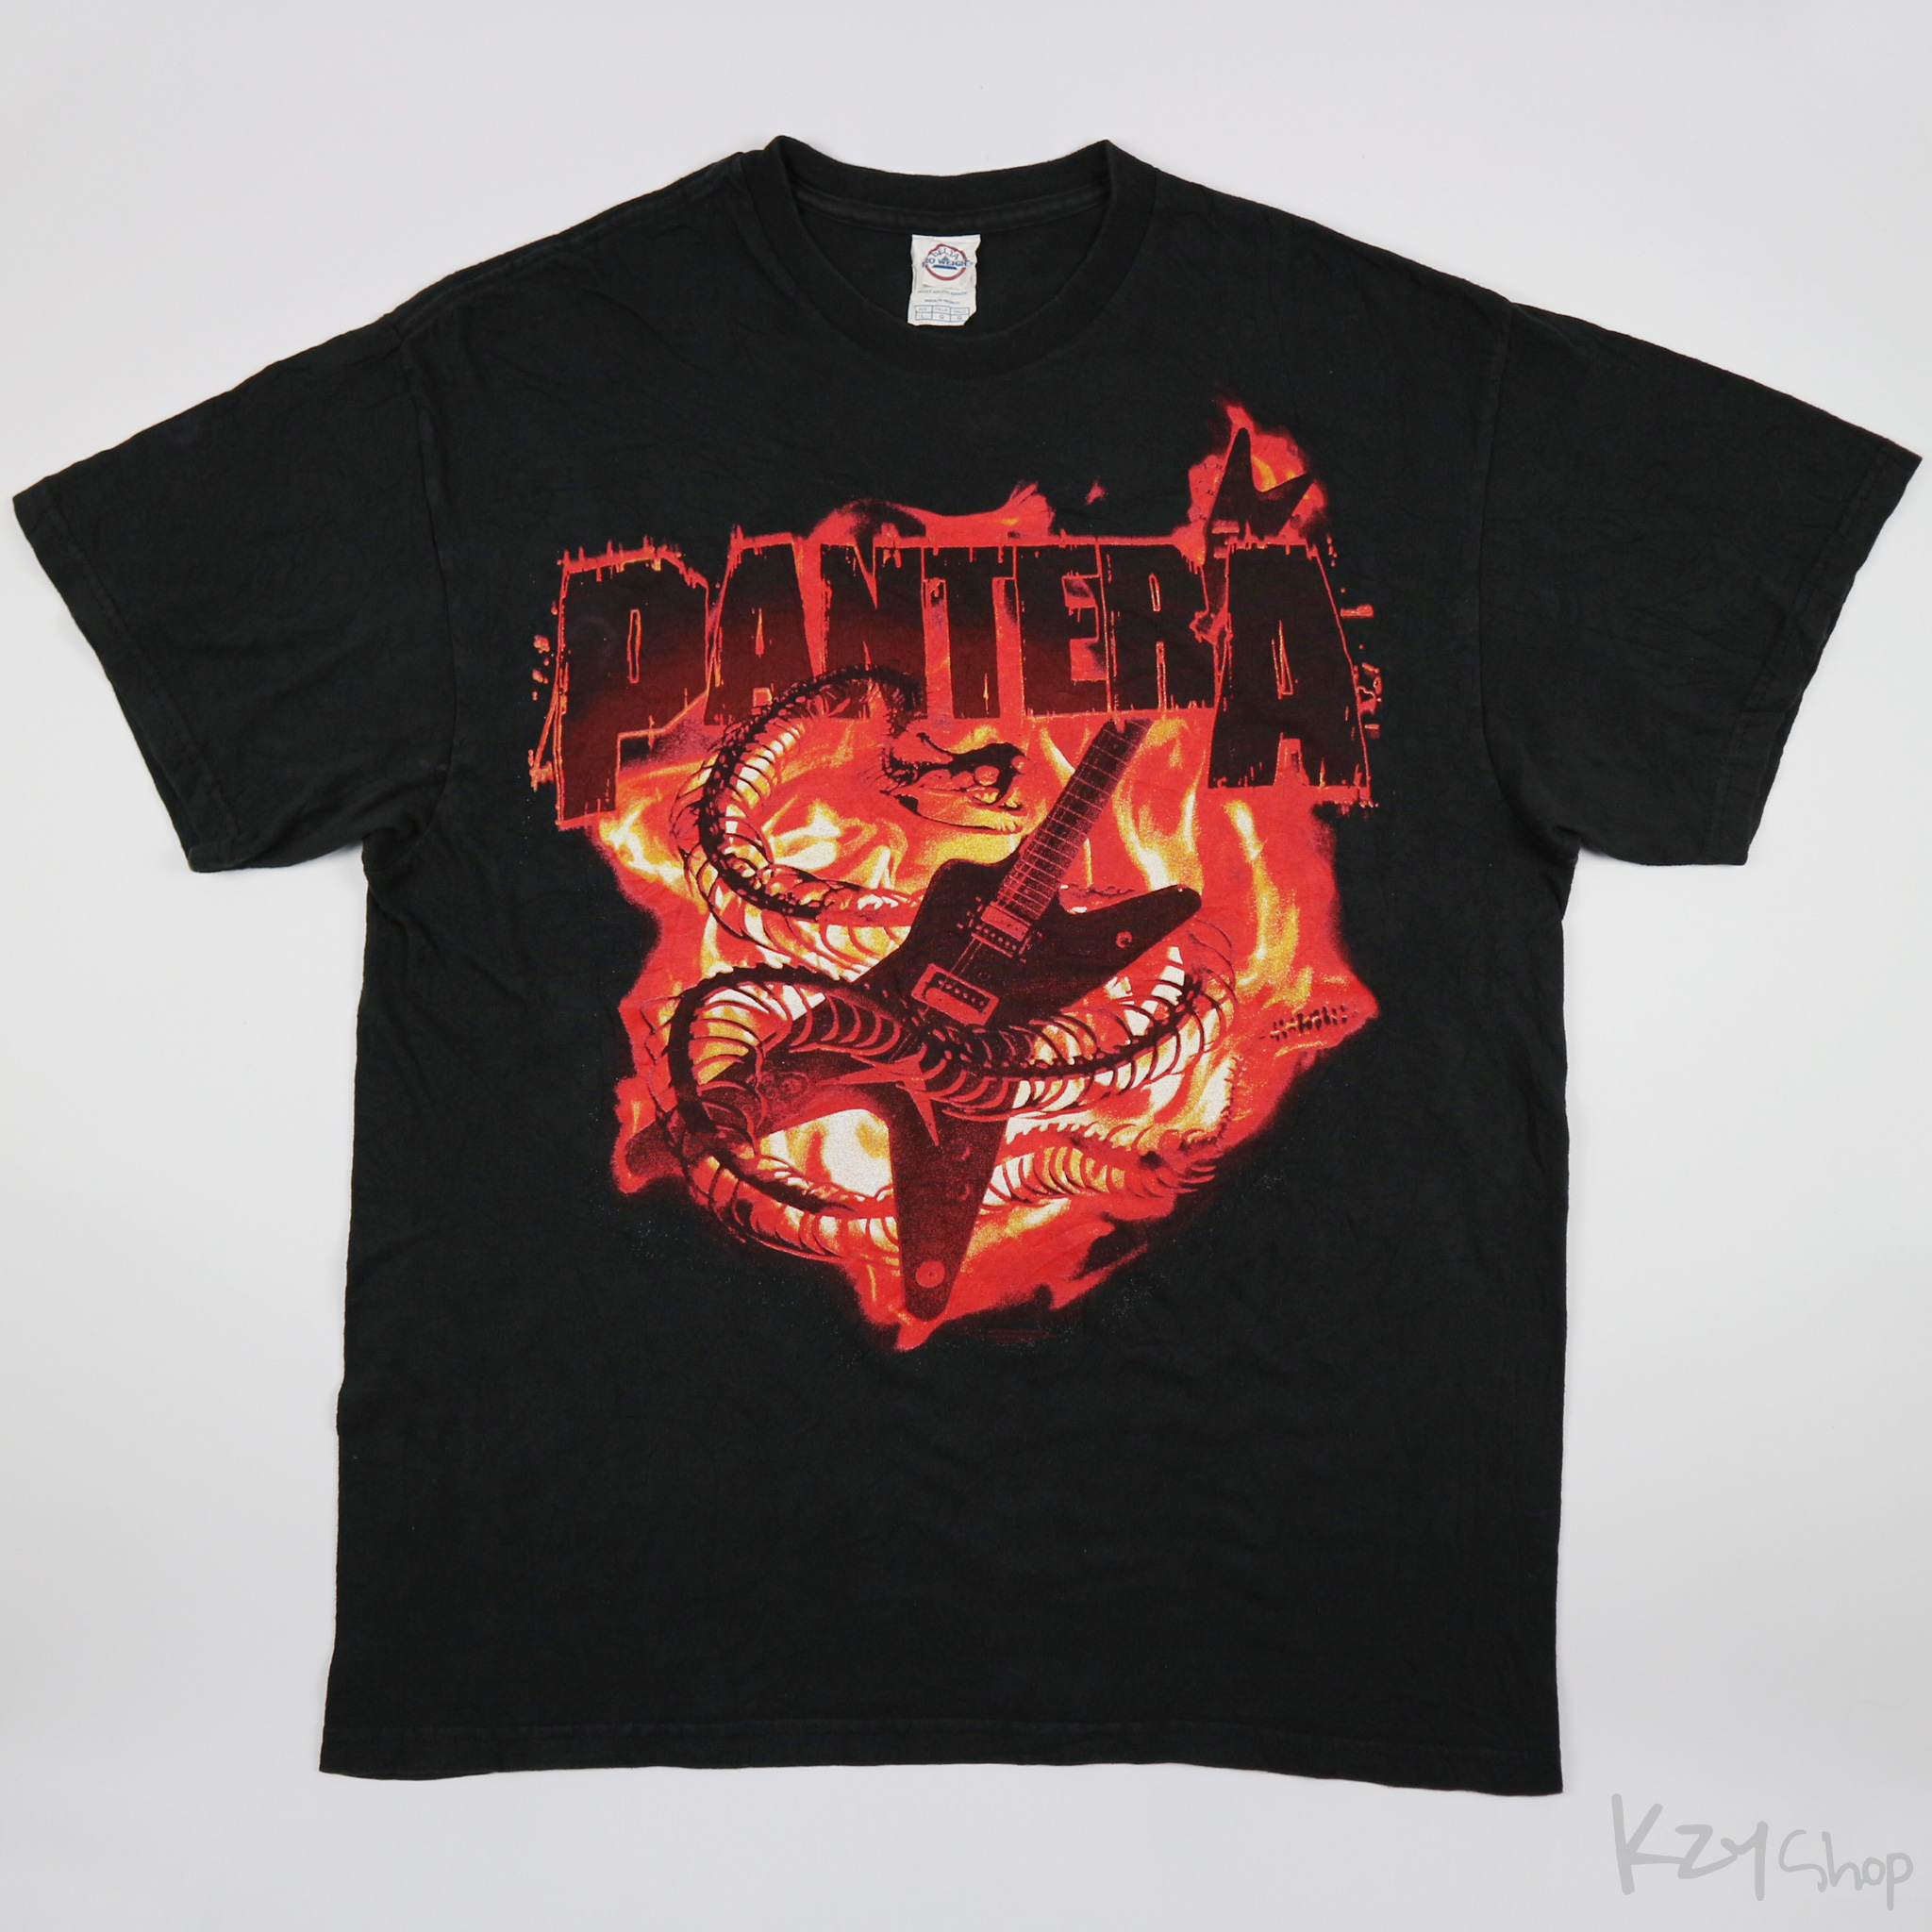 T-shirt-PANTERA-2010-074-L-kzyshop